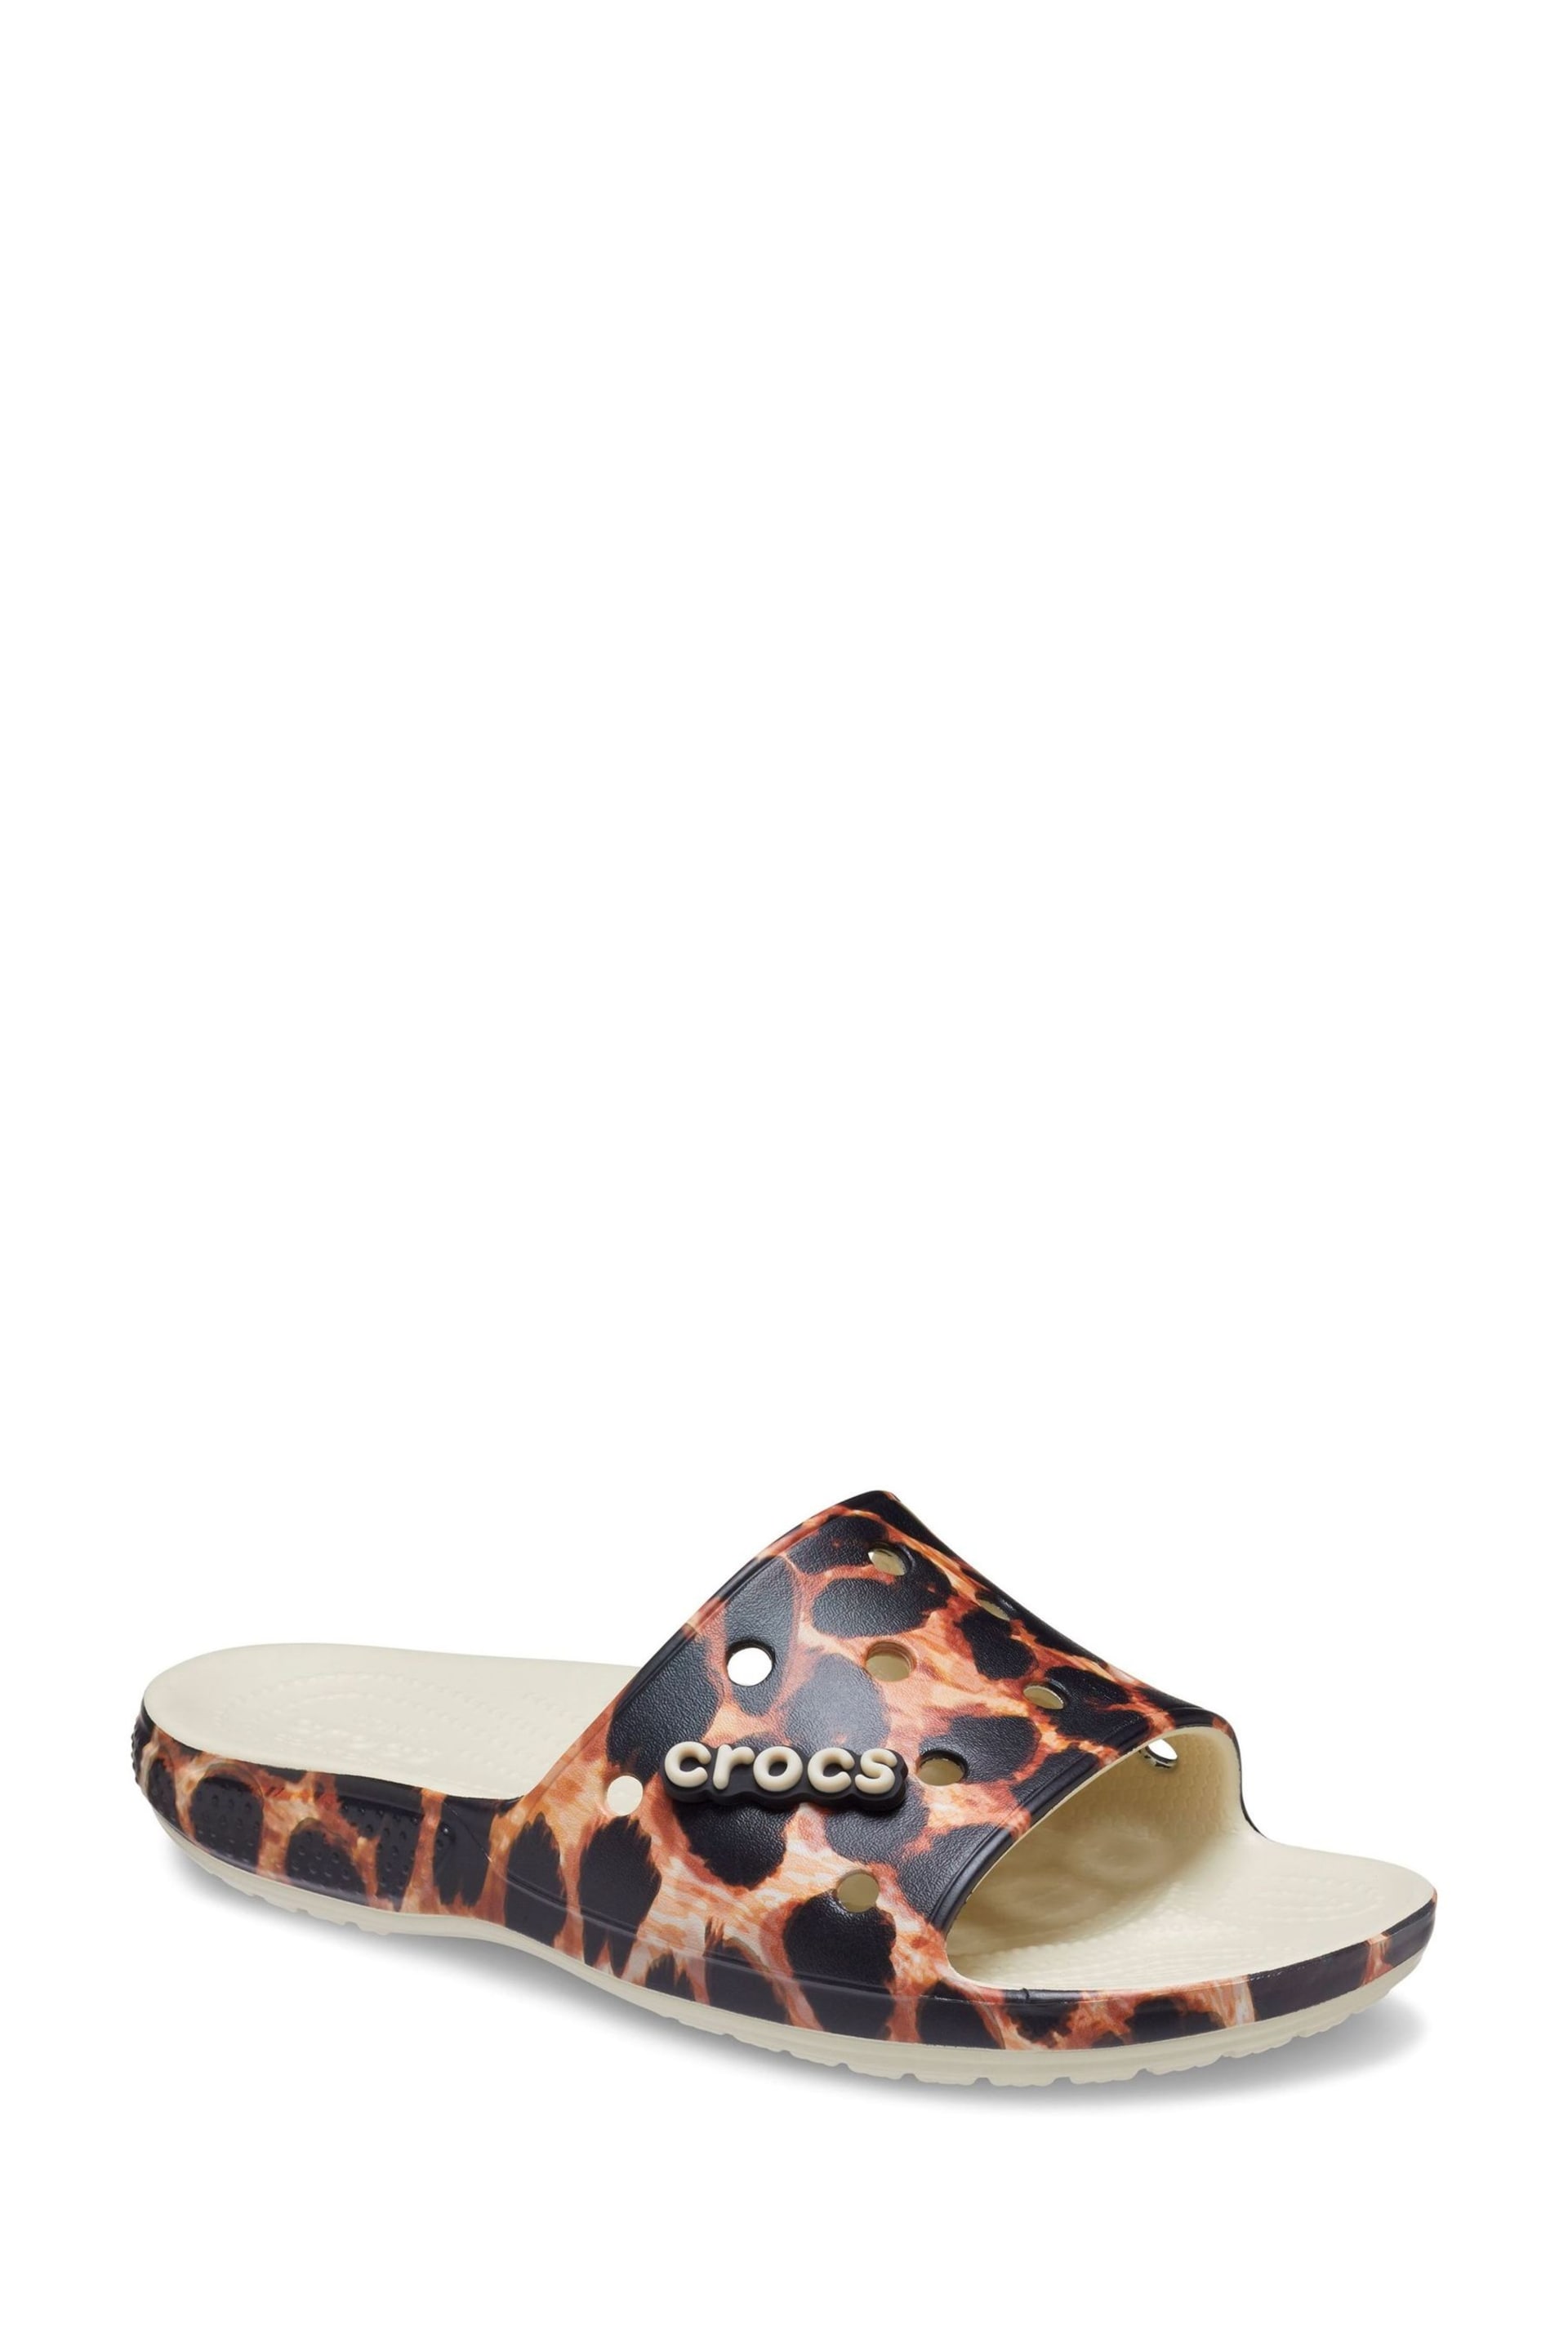 Crocs White Classic Animal Print Slides - Image 2 of 4